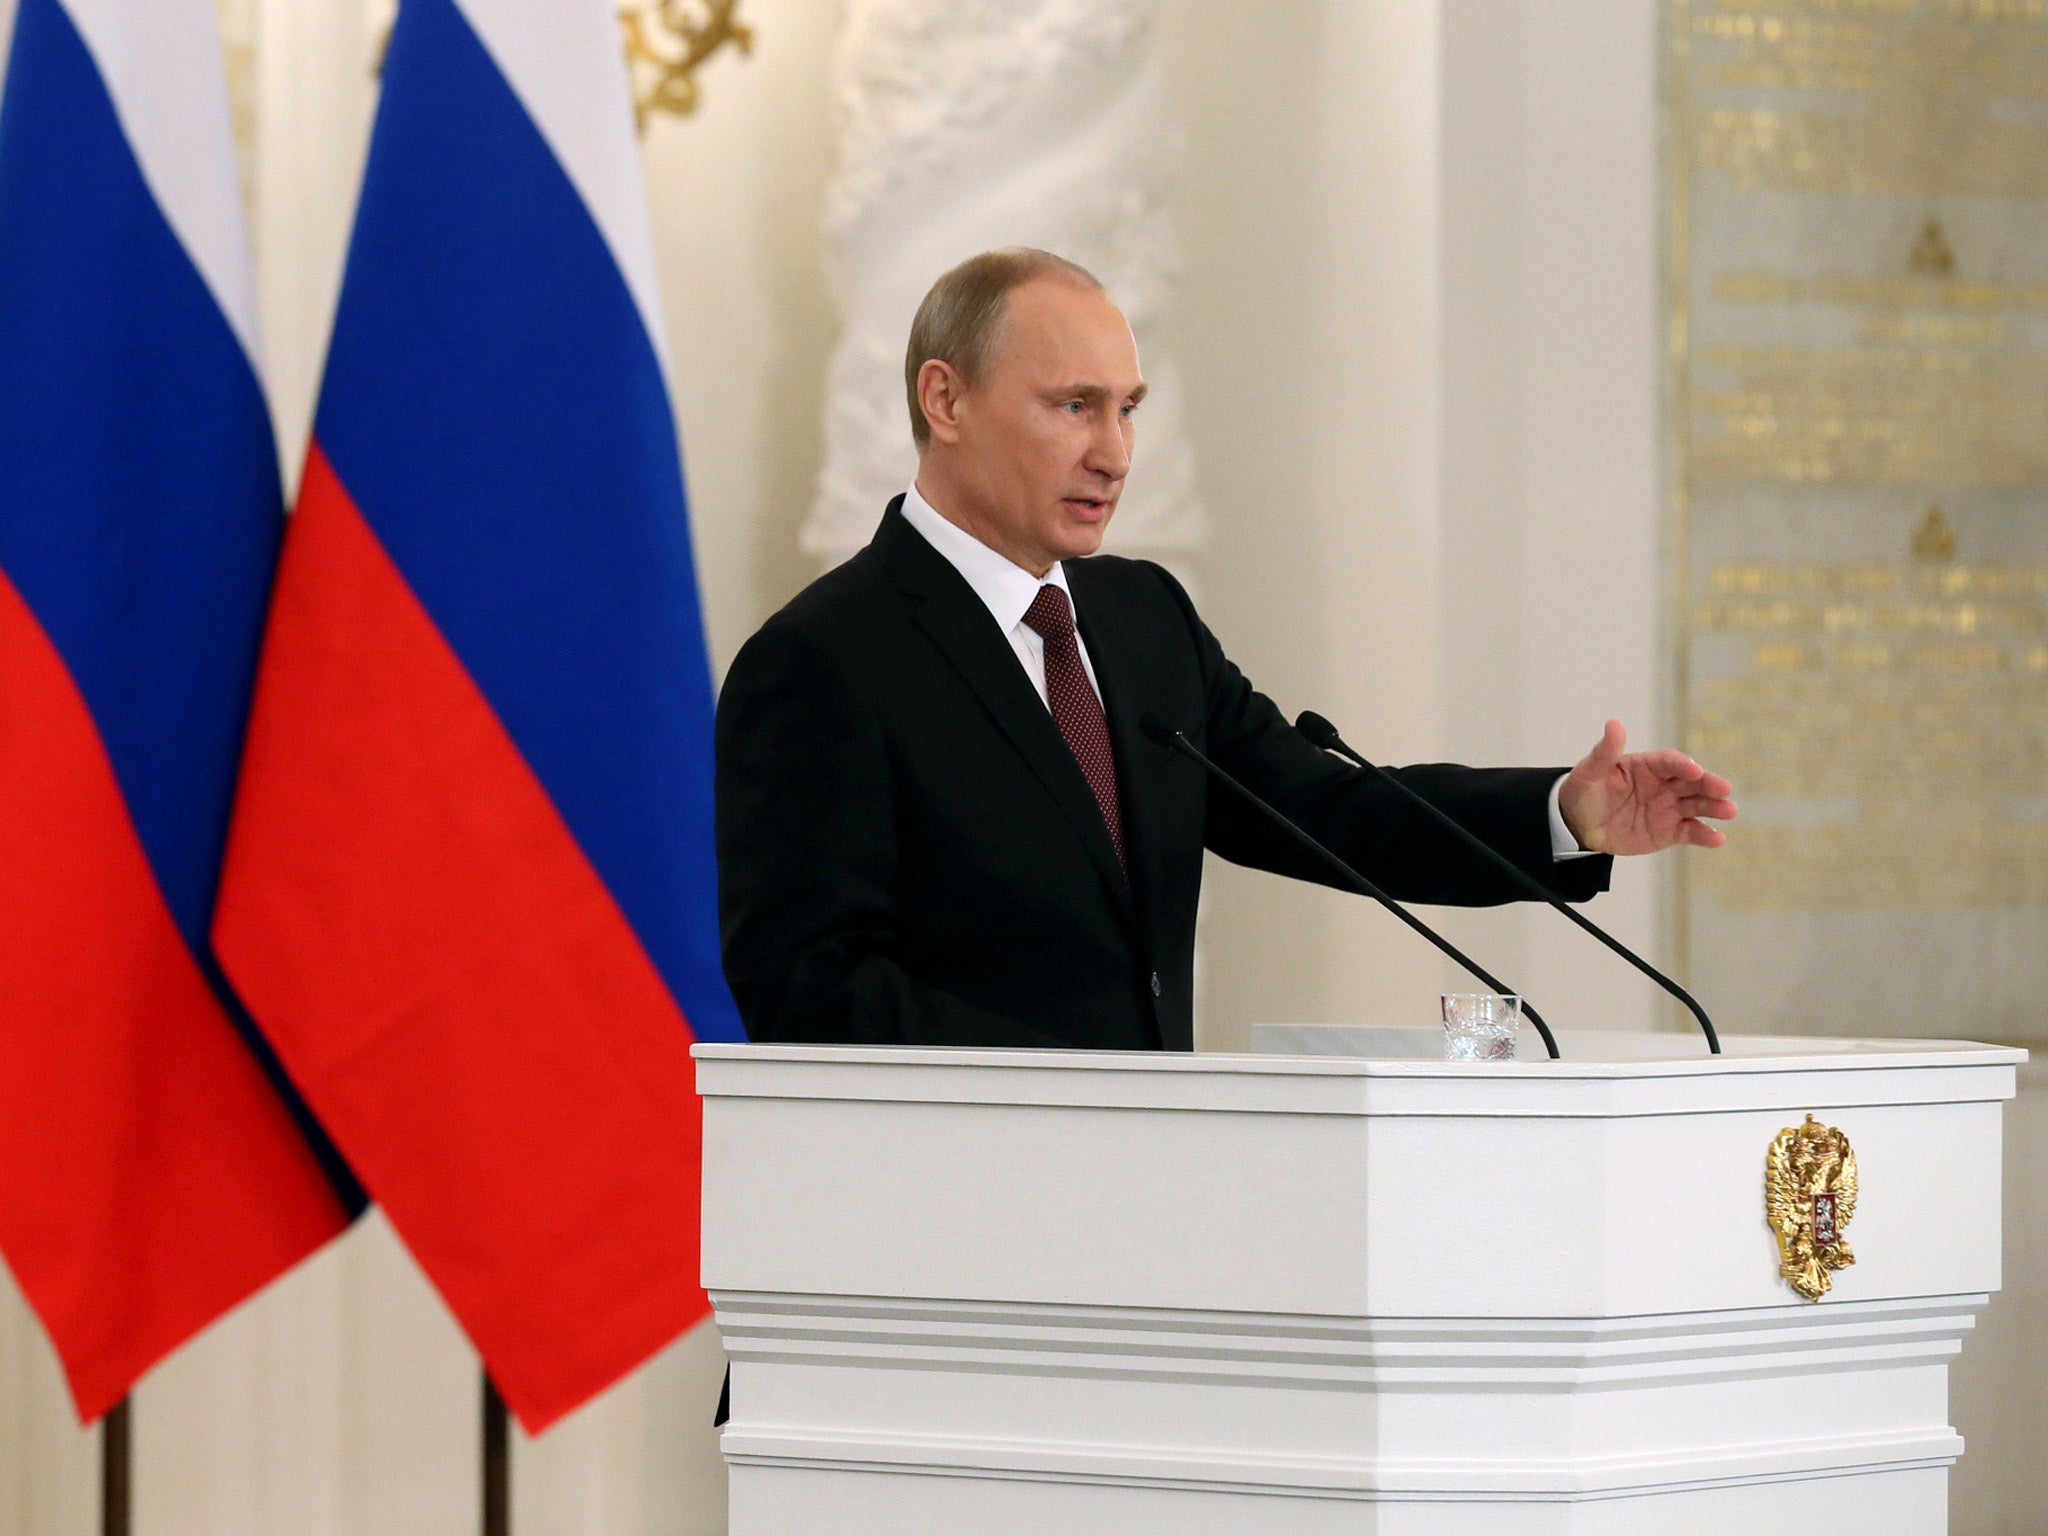 President Vladimir Putin addresses the Federation Council in Moscow's Kremlin